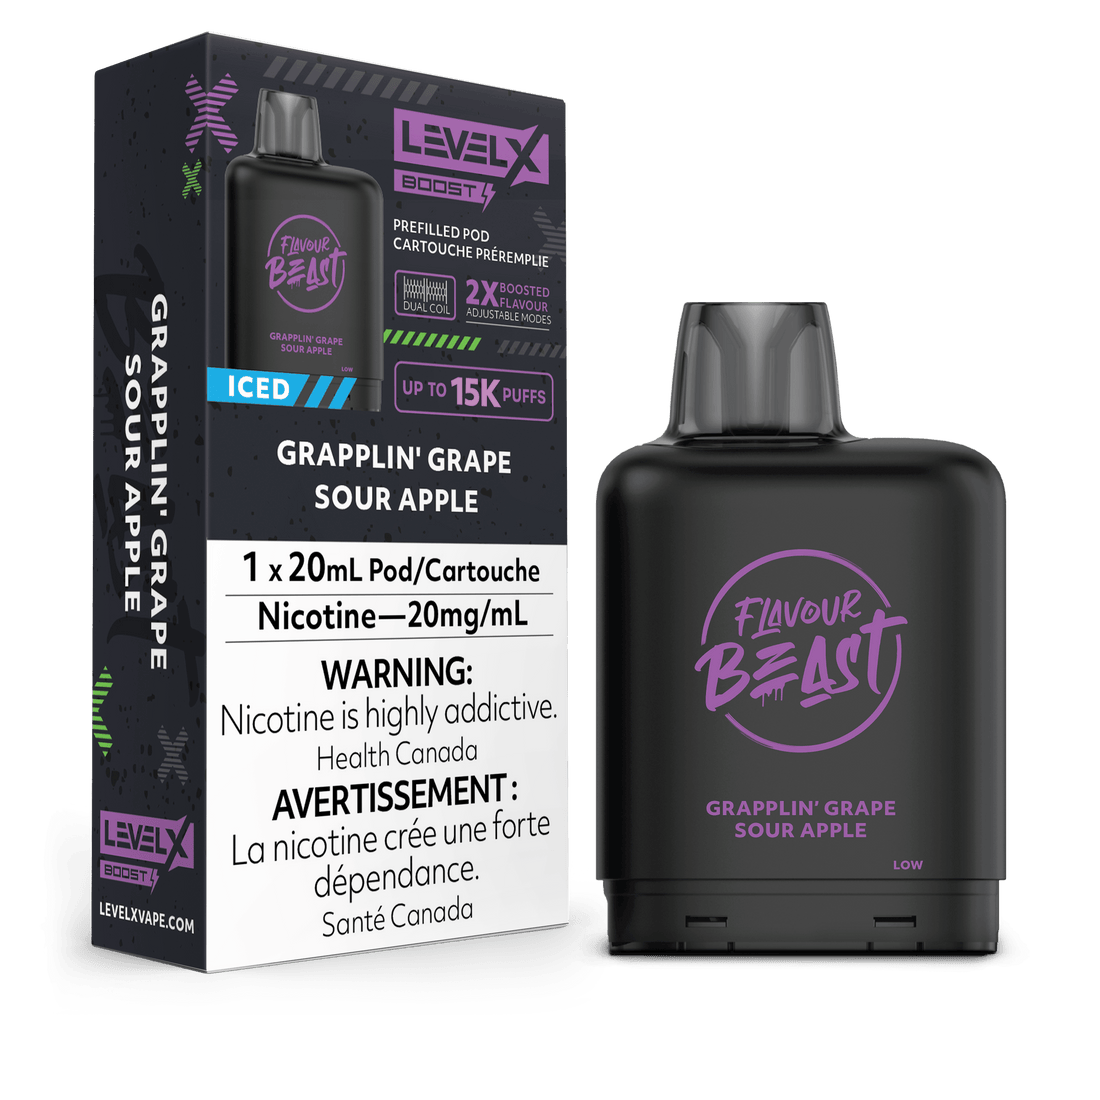 Level X Boost Flavour Beast - Grapplin' Grape Sour Apple Iced - Vapor Shoppe